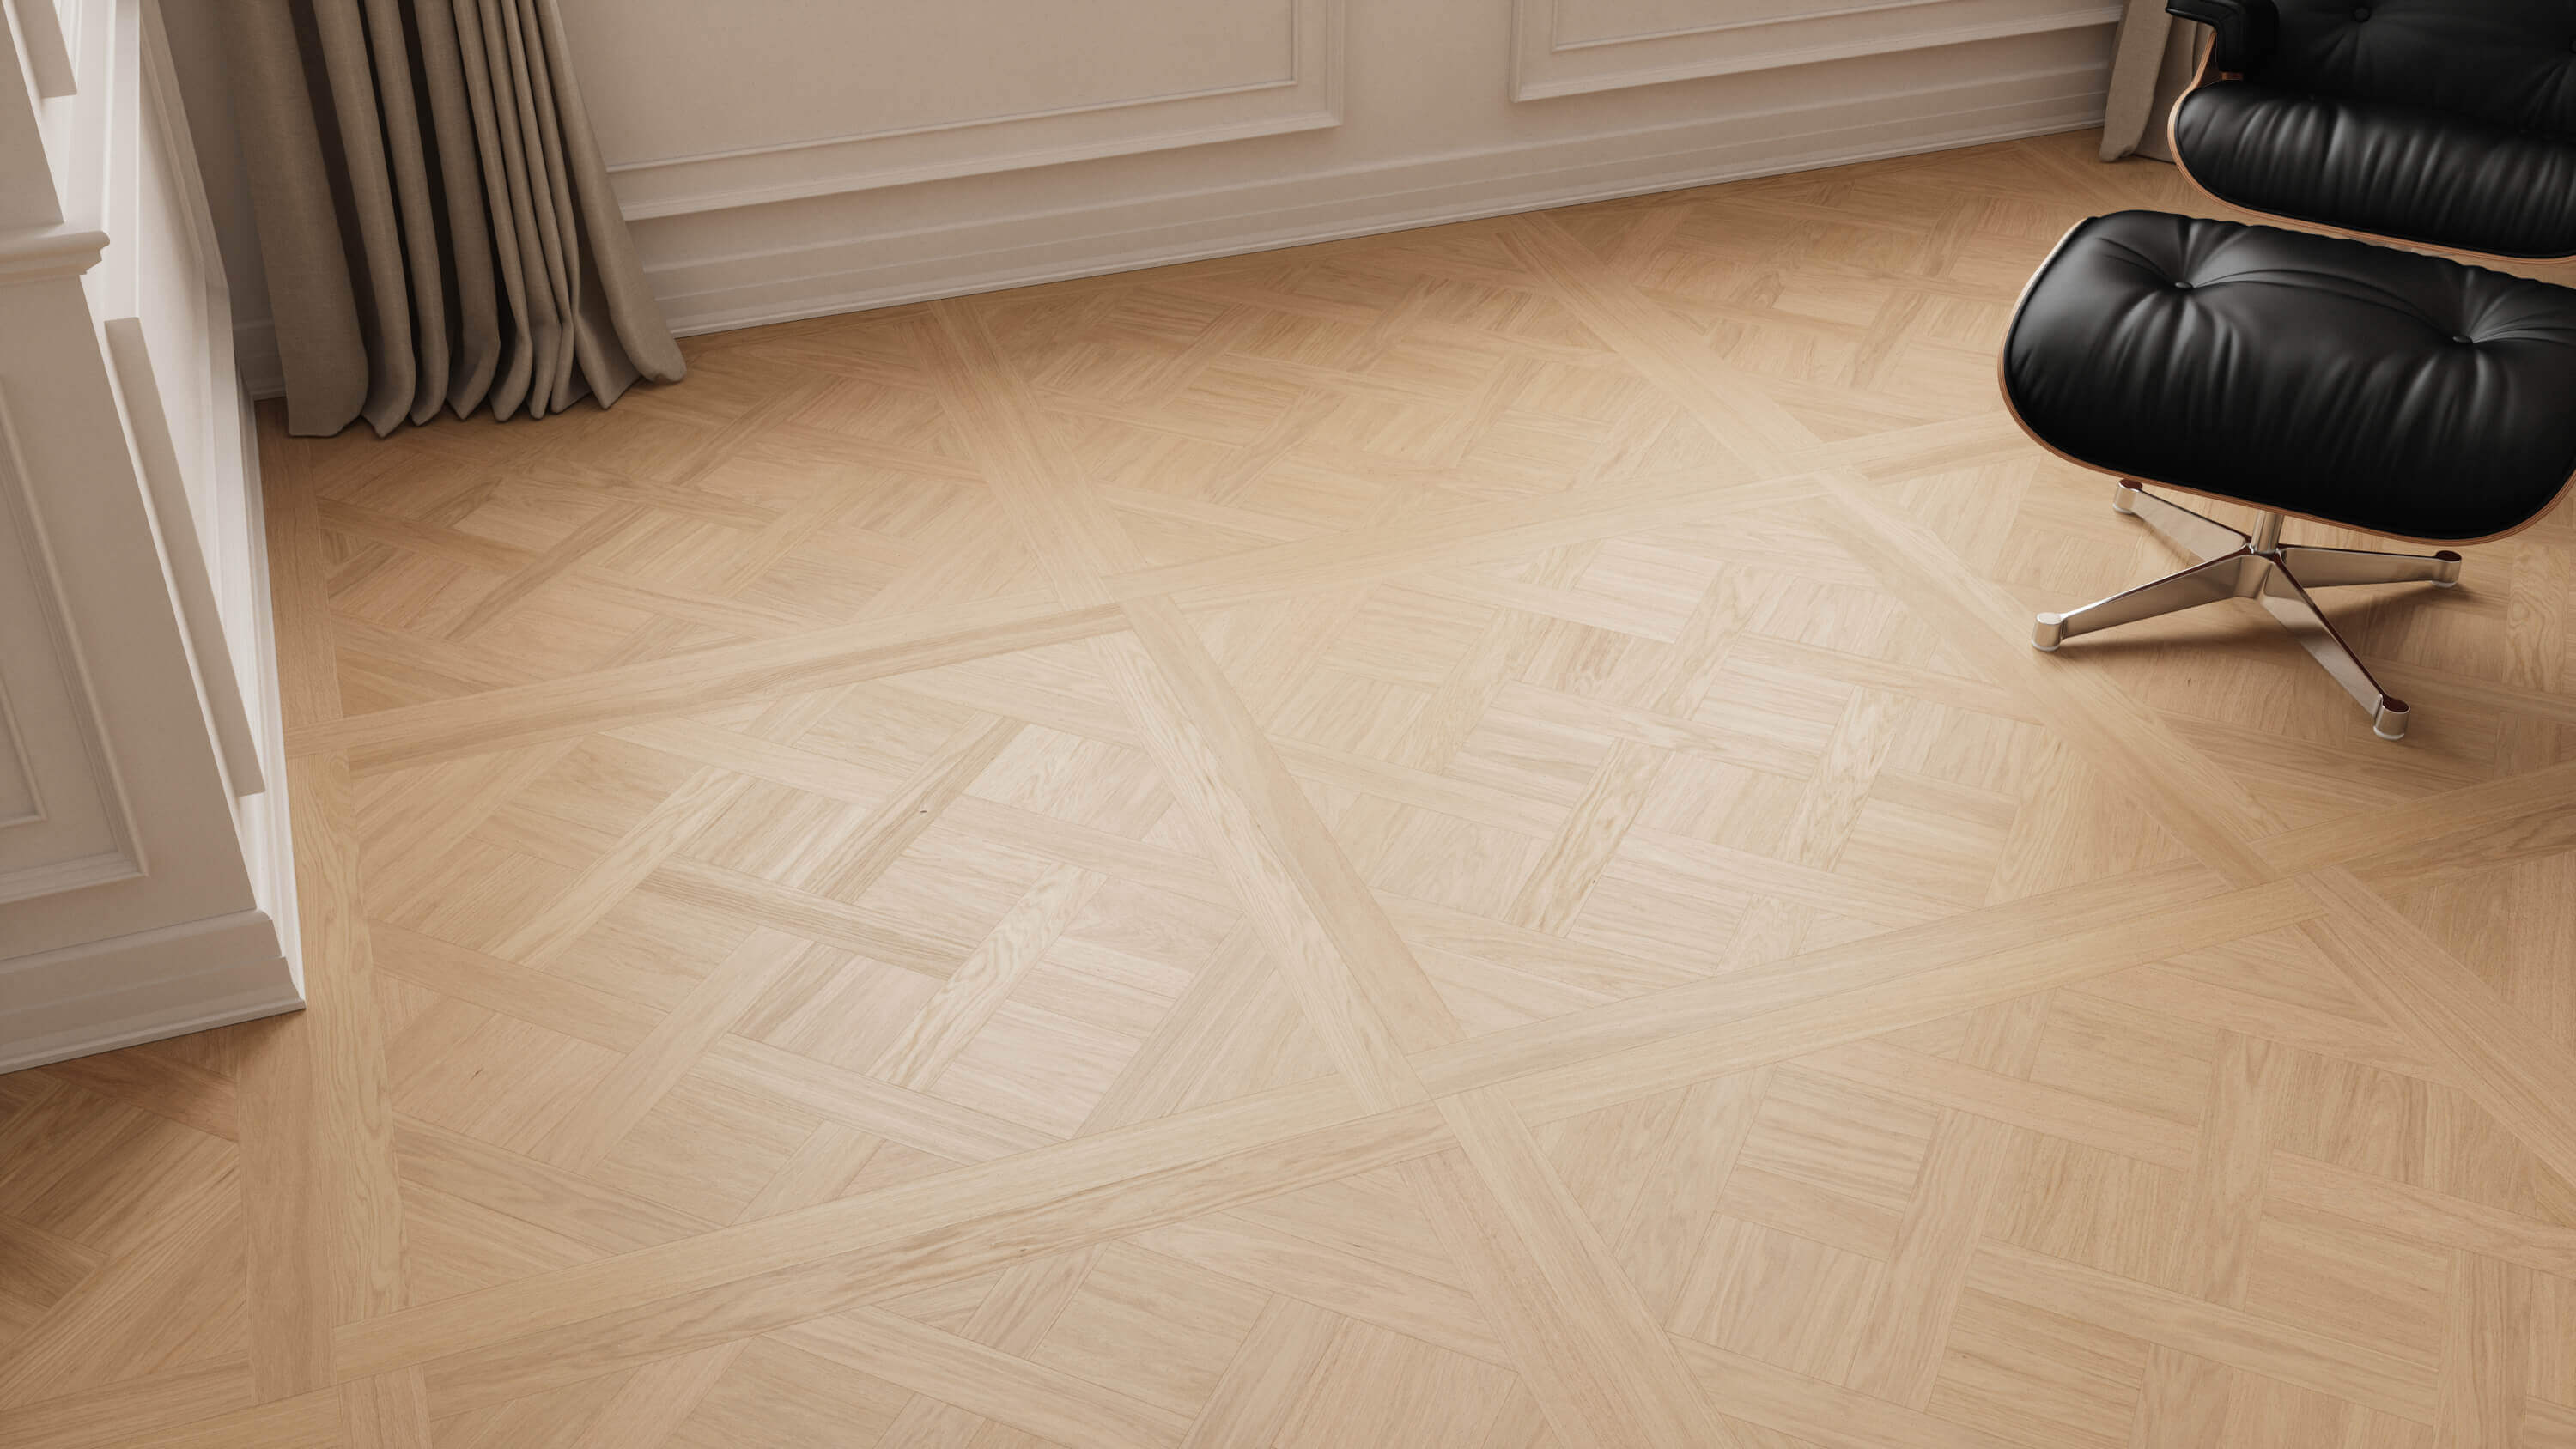 seamless oak floor texture